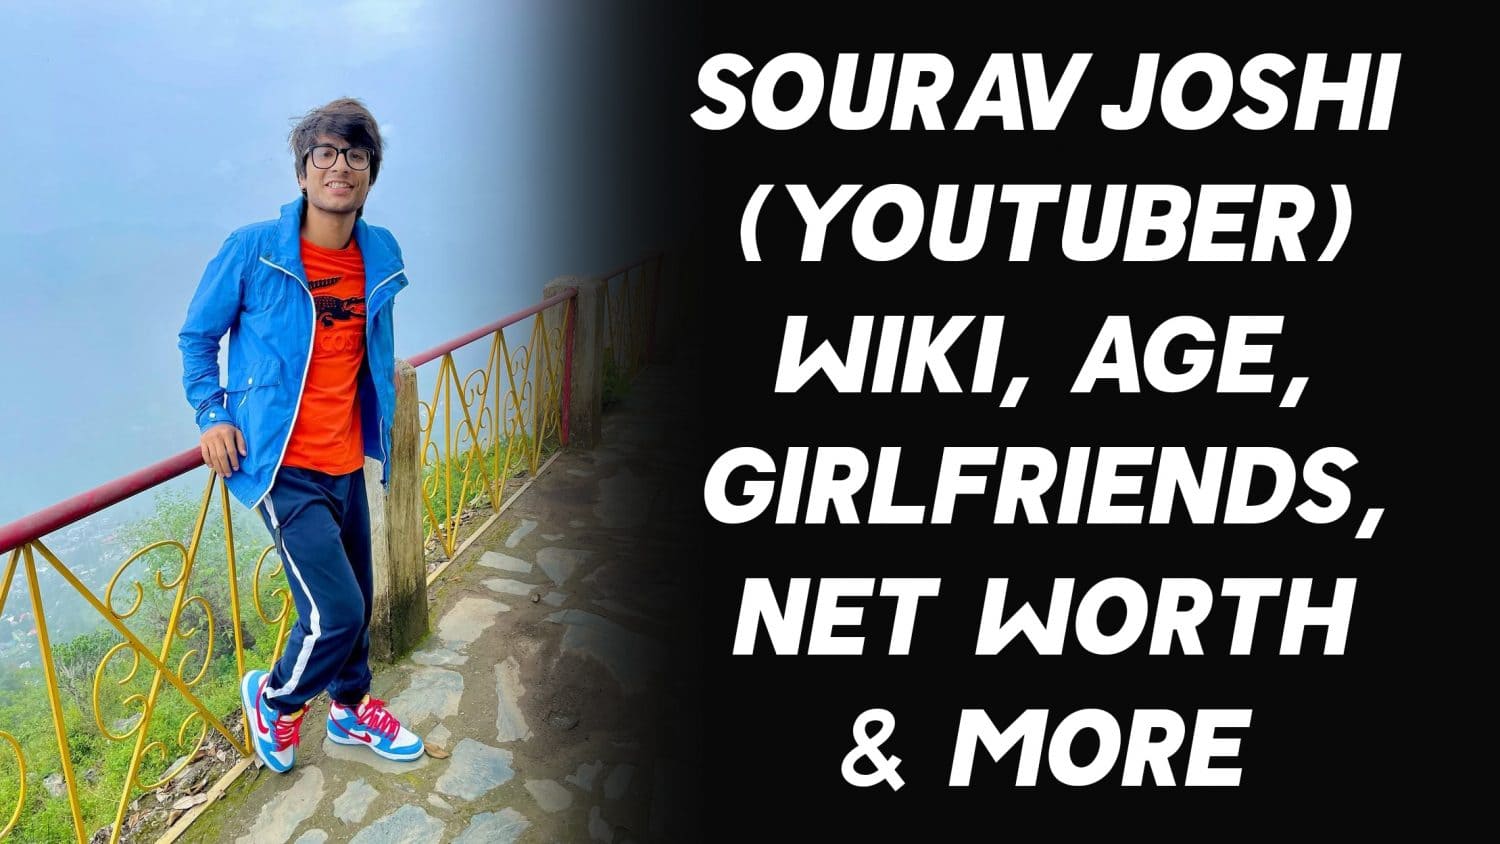 Sourav Joshi (YouTuber) Wiki, Age, Girlfriends, Net Worth & More 1